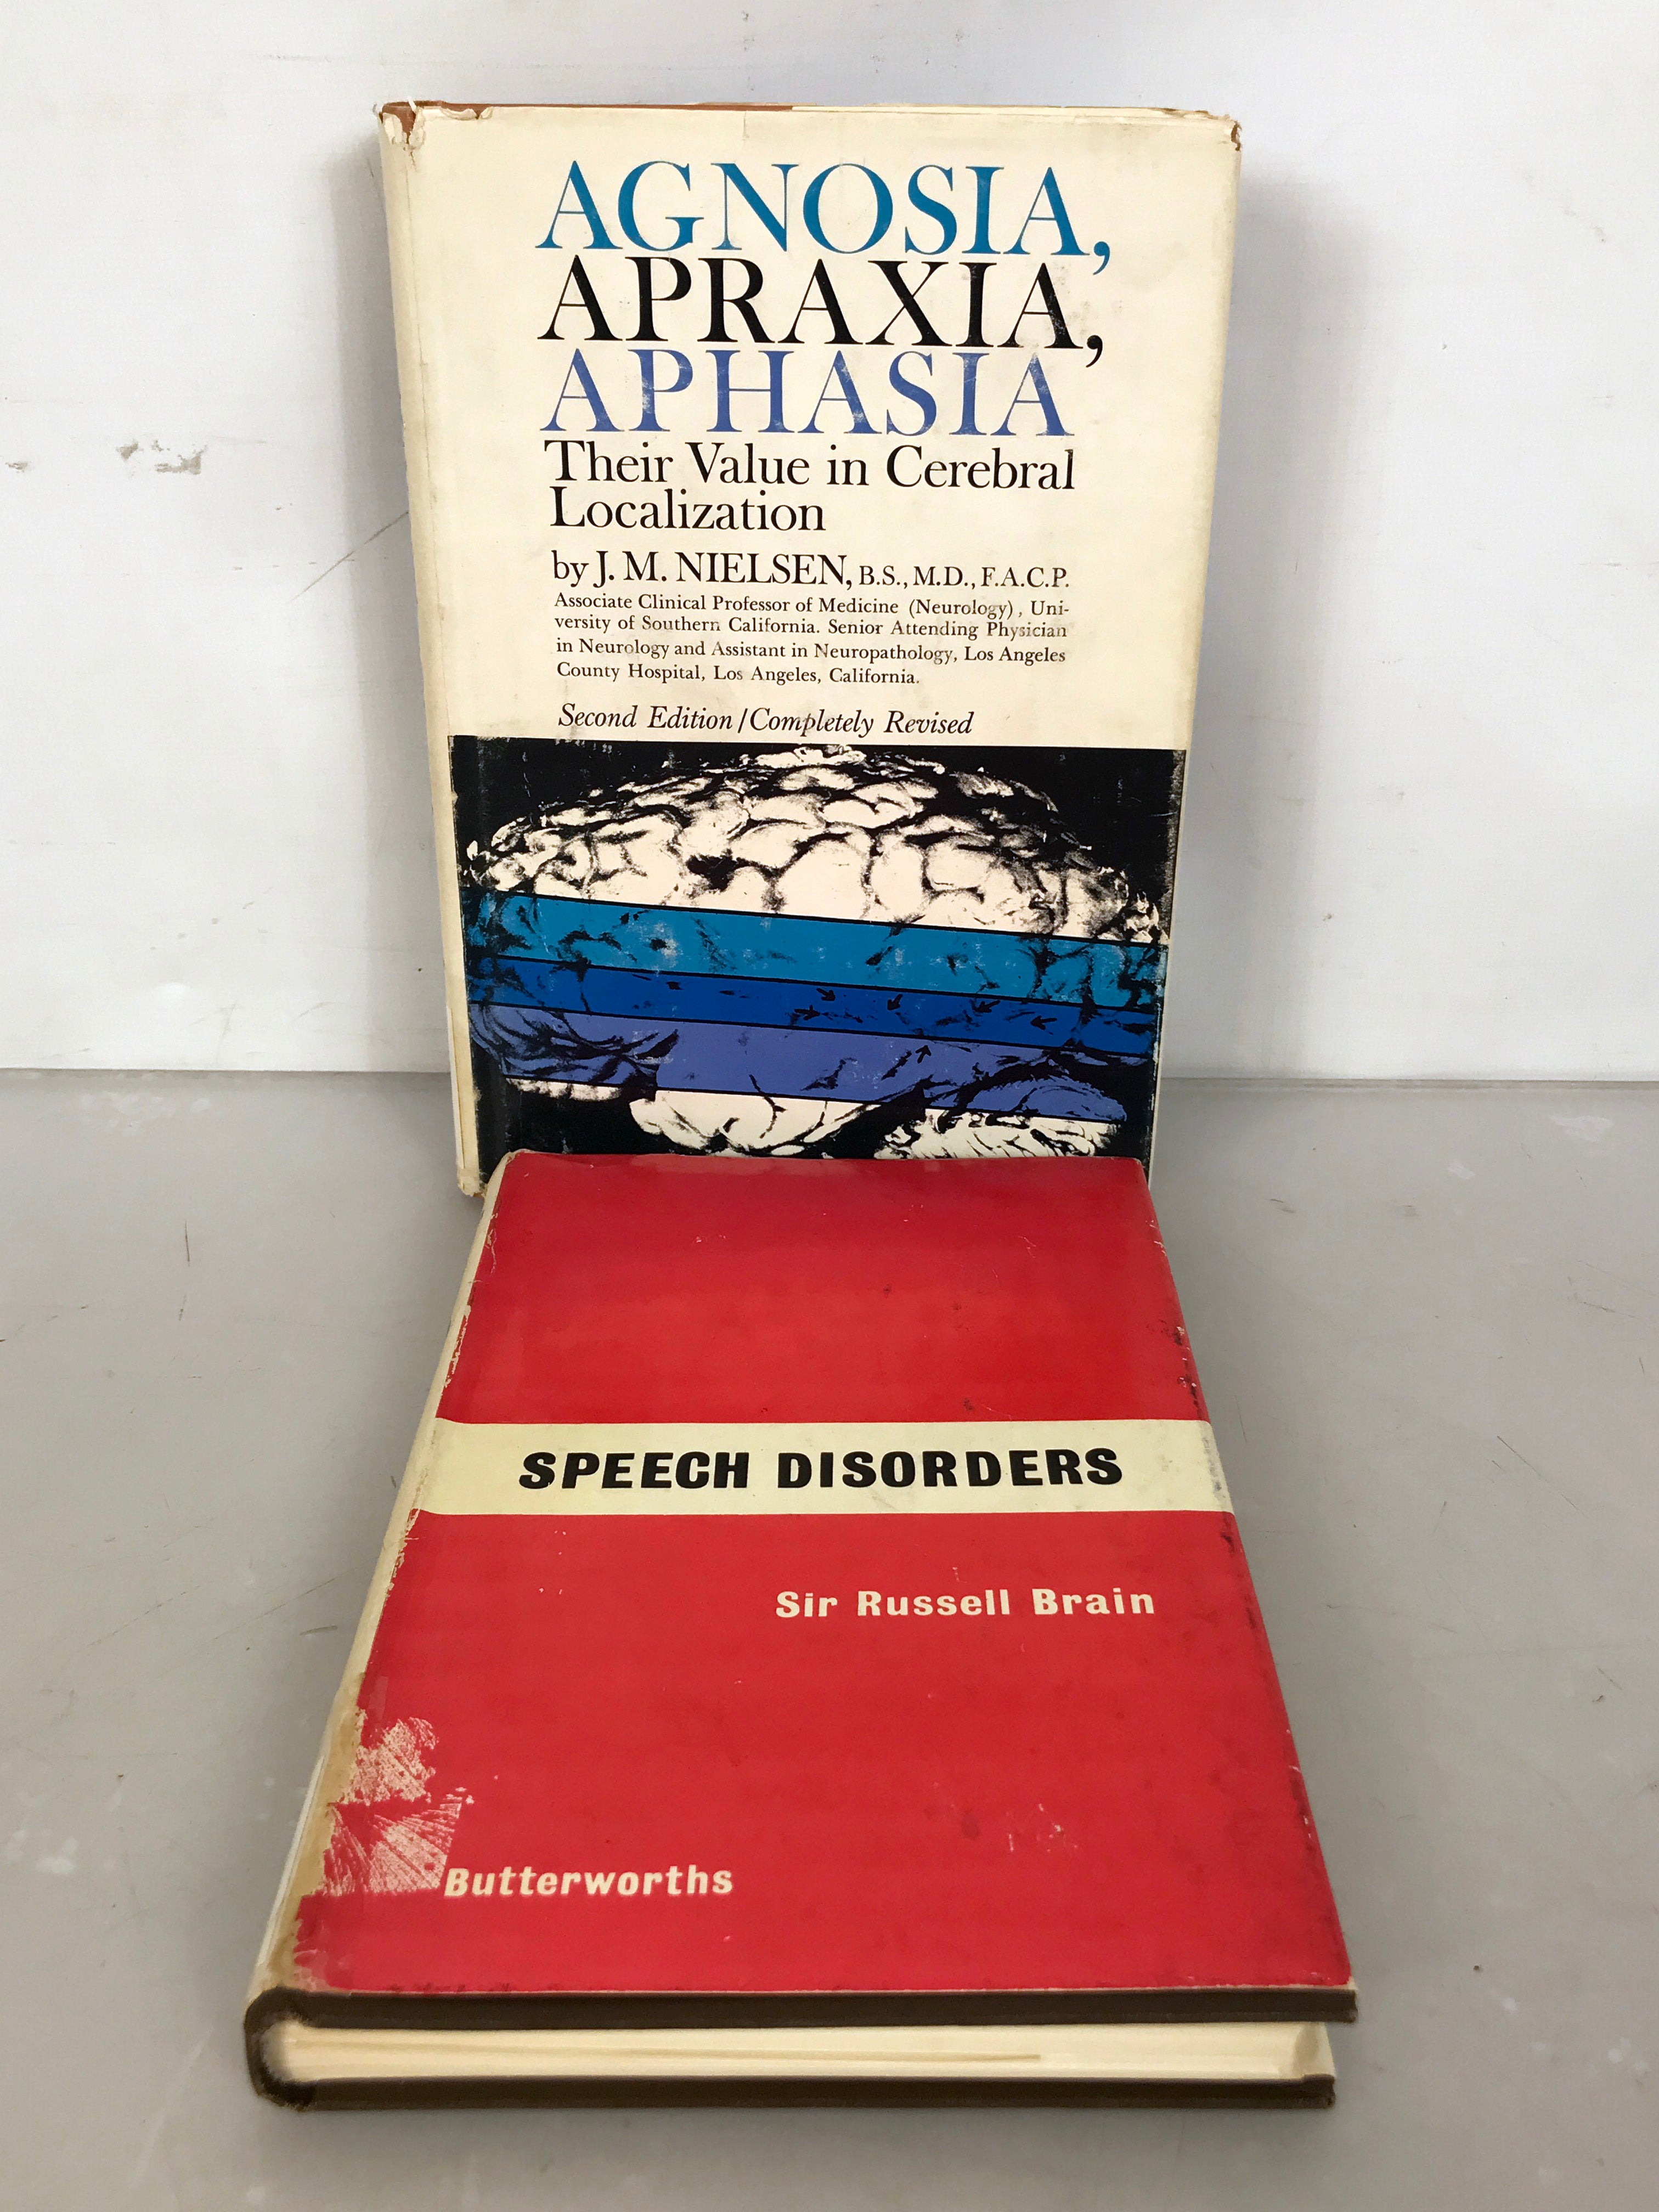 Agnosia, Apraxia, Aphasia by Nielsen/Speech Disorders by Russell Brain HC DJ